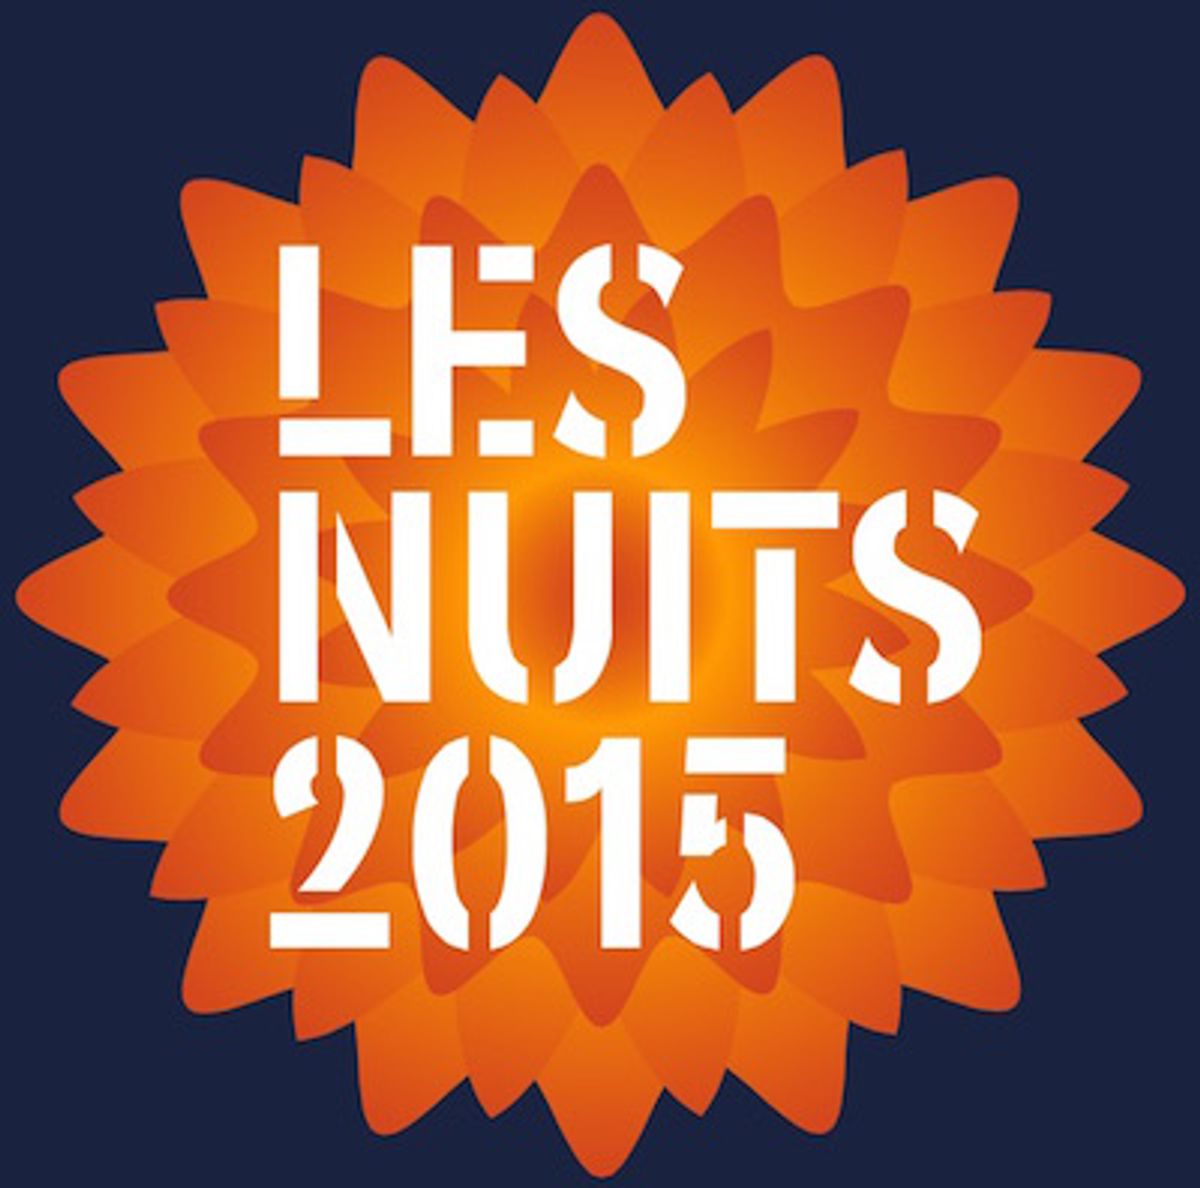 Les Nuits 2015 - Concertgids special (3)